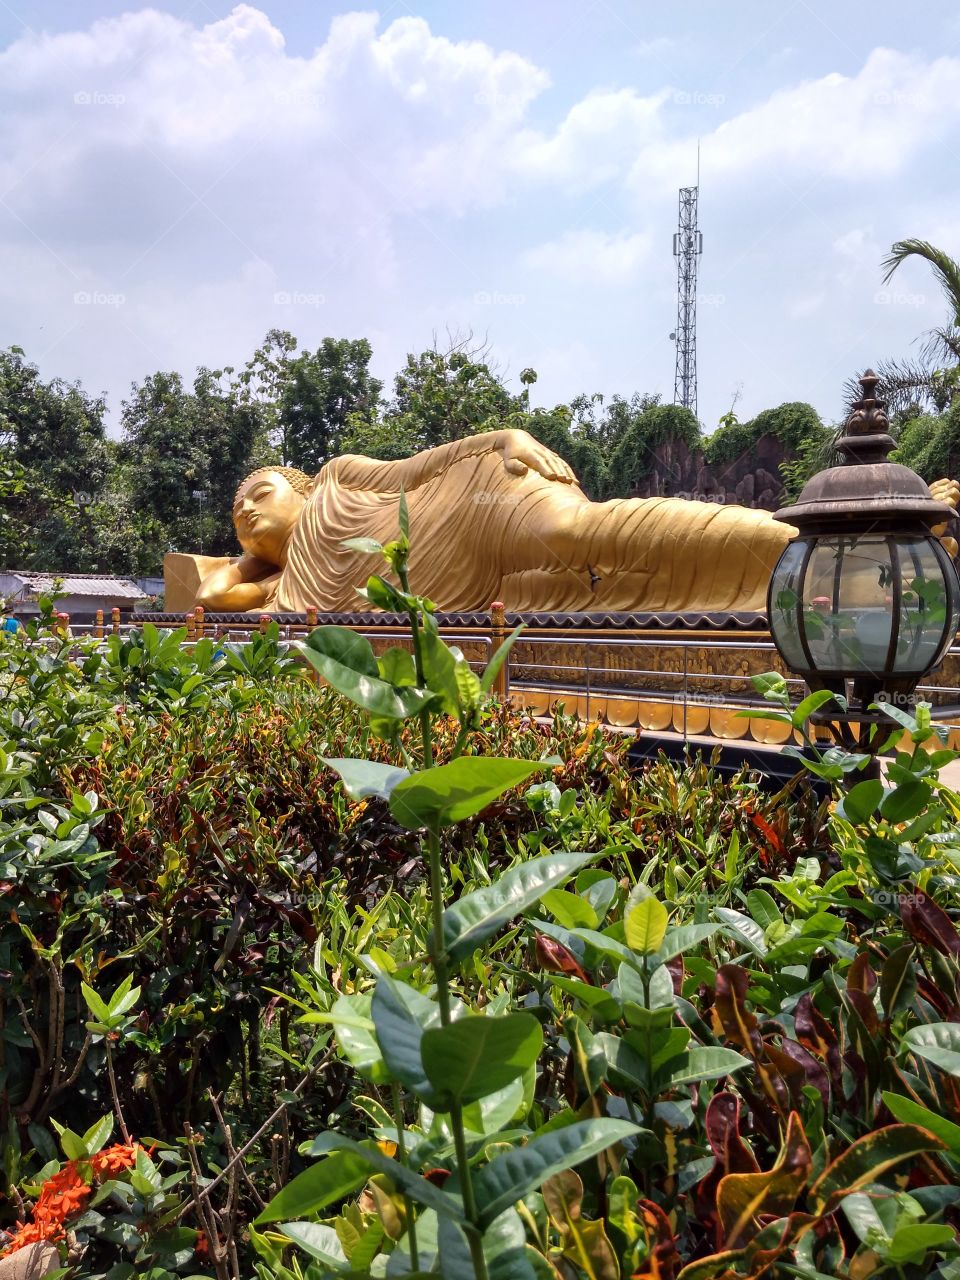 The Buddha statue sleeps